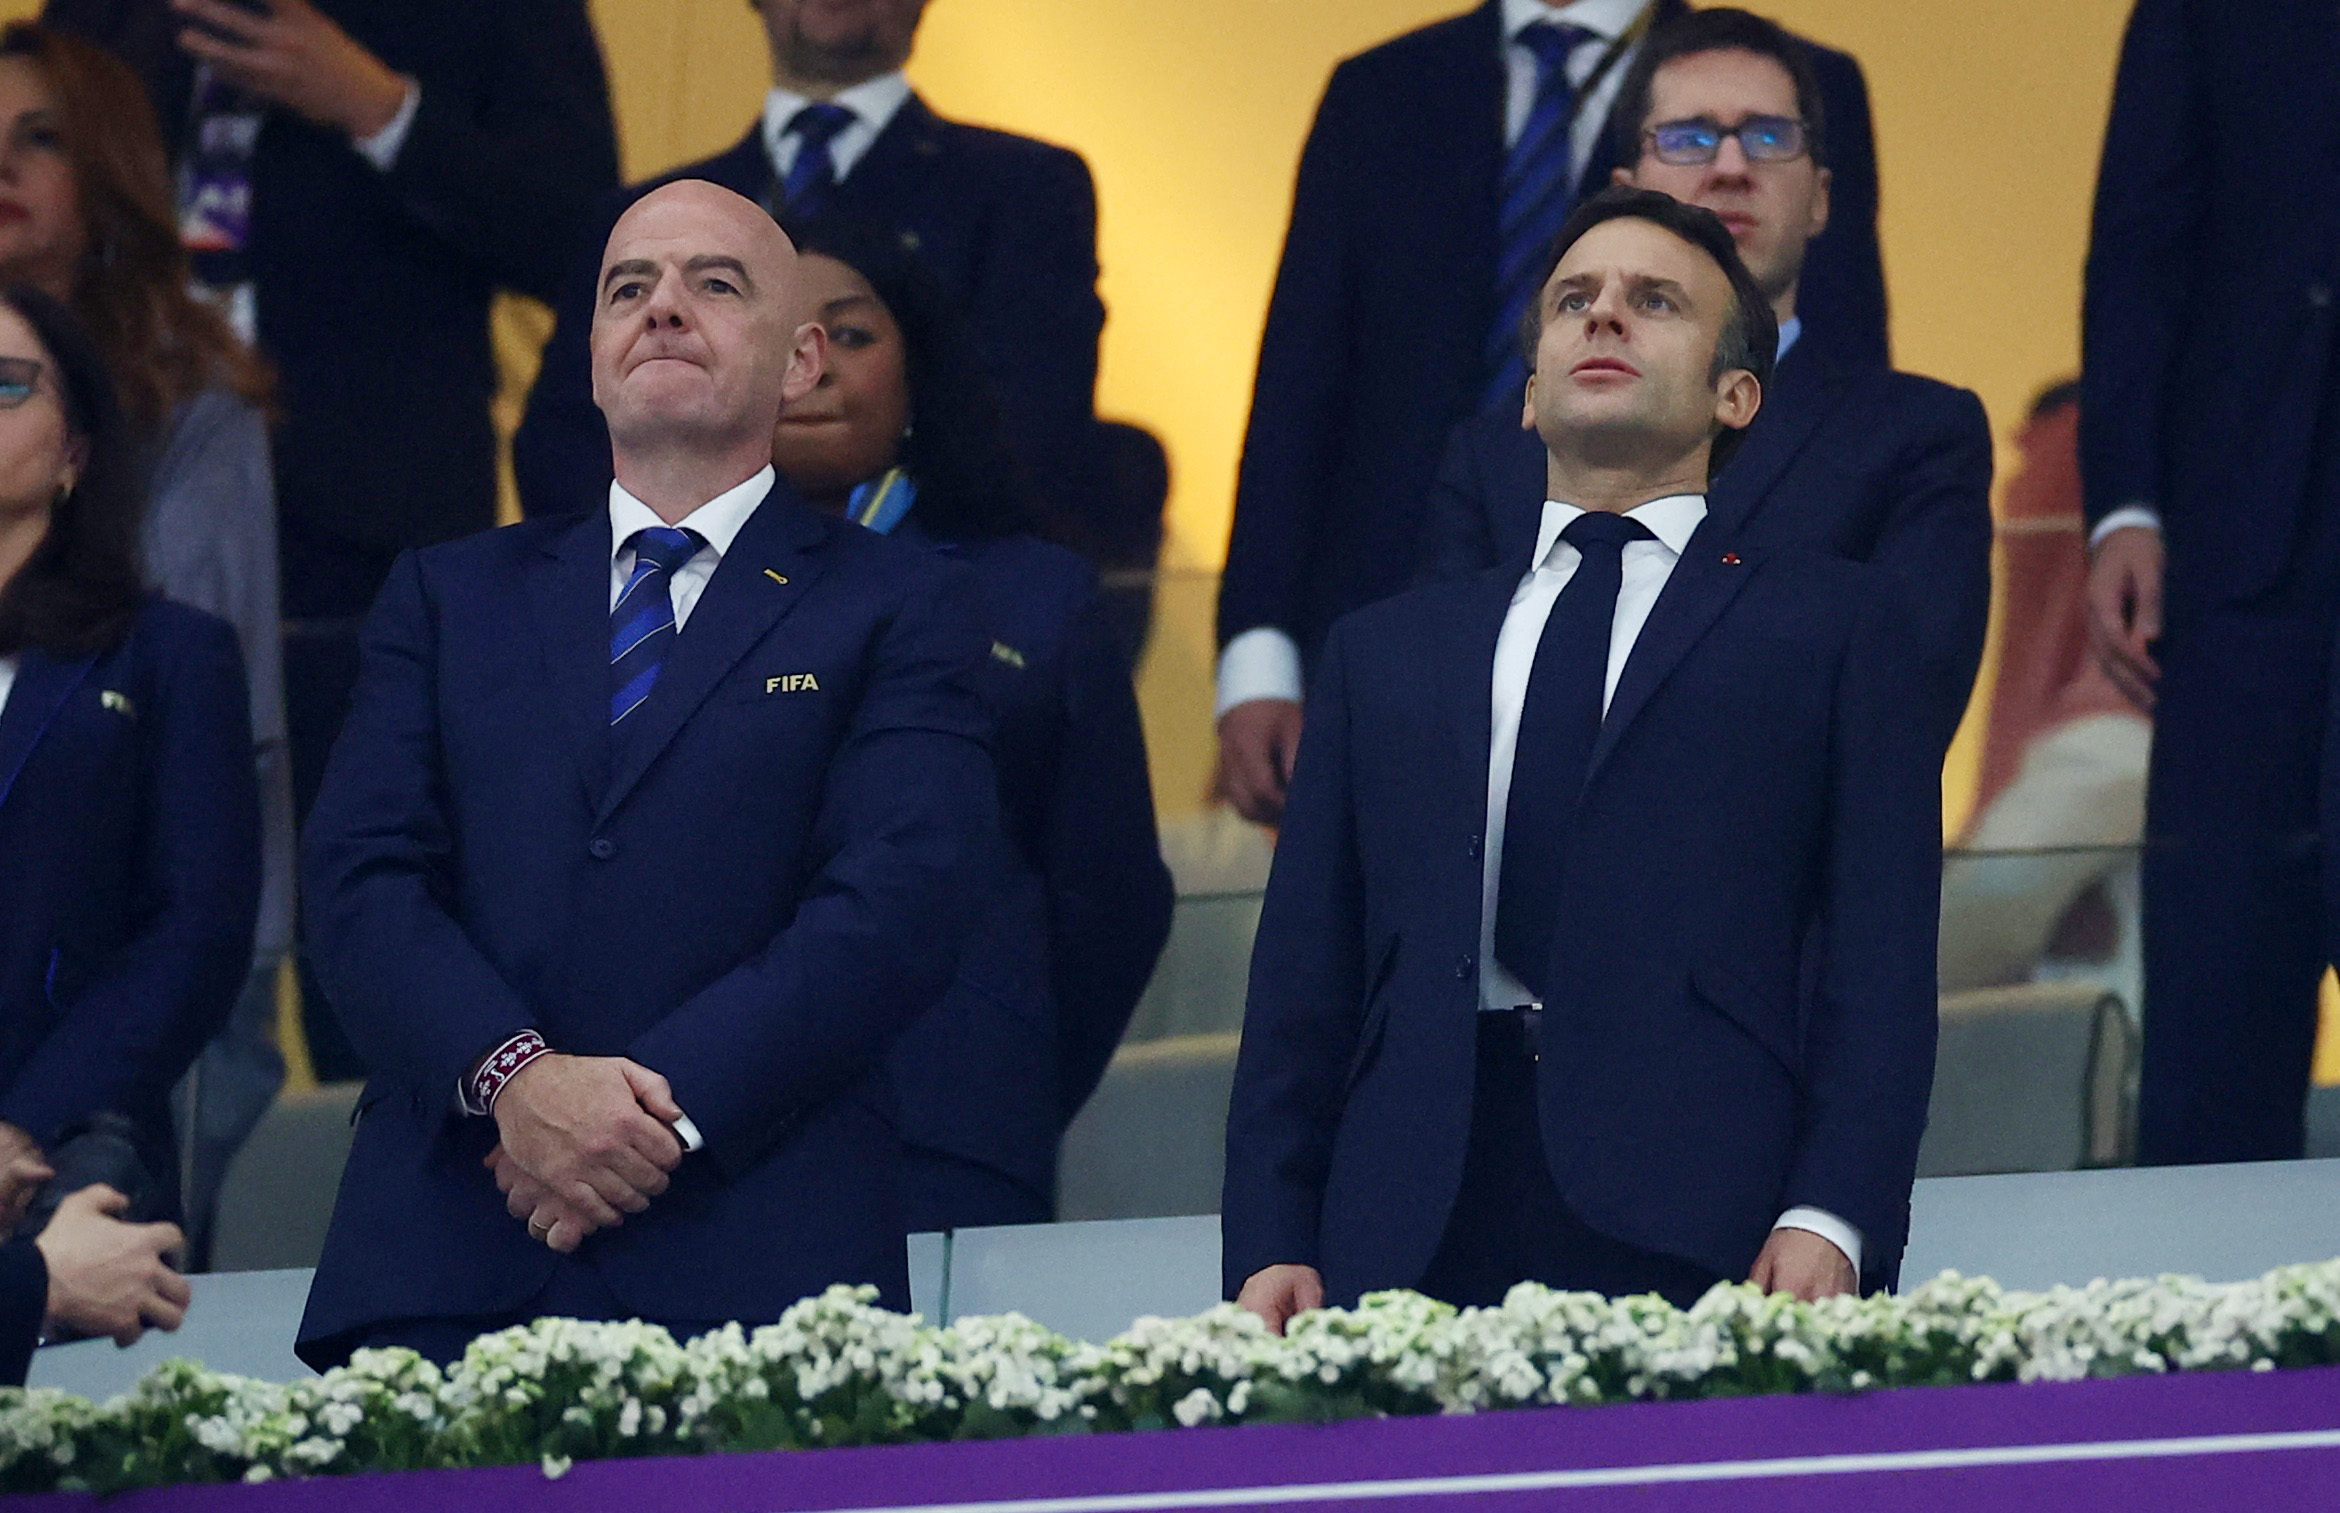 Emmanuel Macron vio la semifinal entre Francia y Marruecos en Al Bayt Stadium, junto al titular de la FIFA, Gianni Infantino. REUTERS/Kai Pfaffenbach